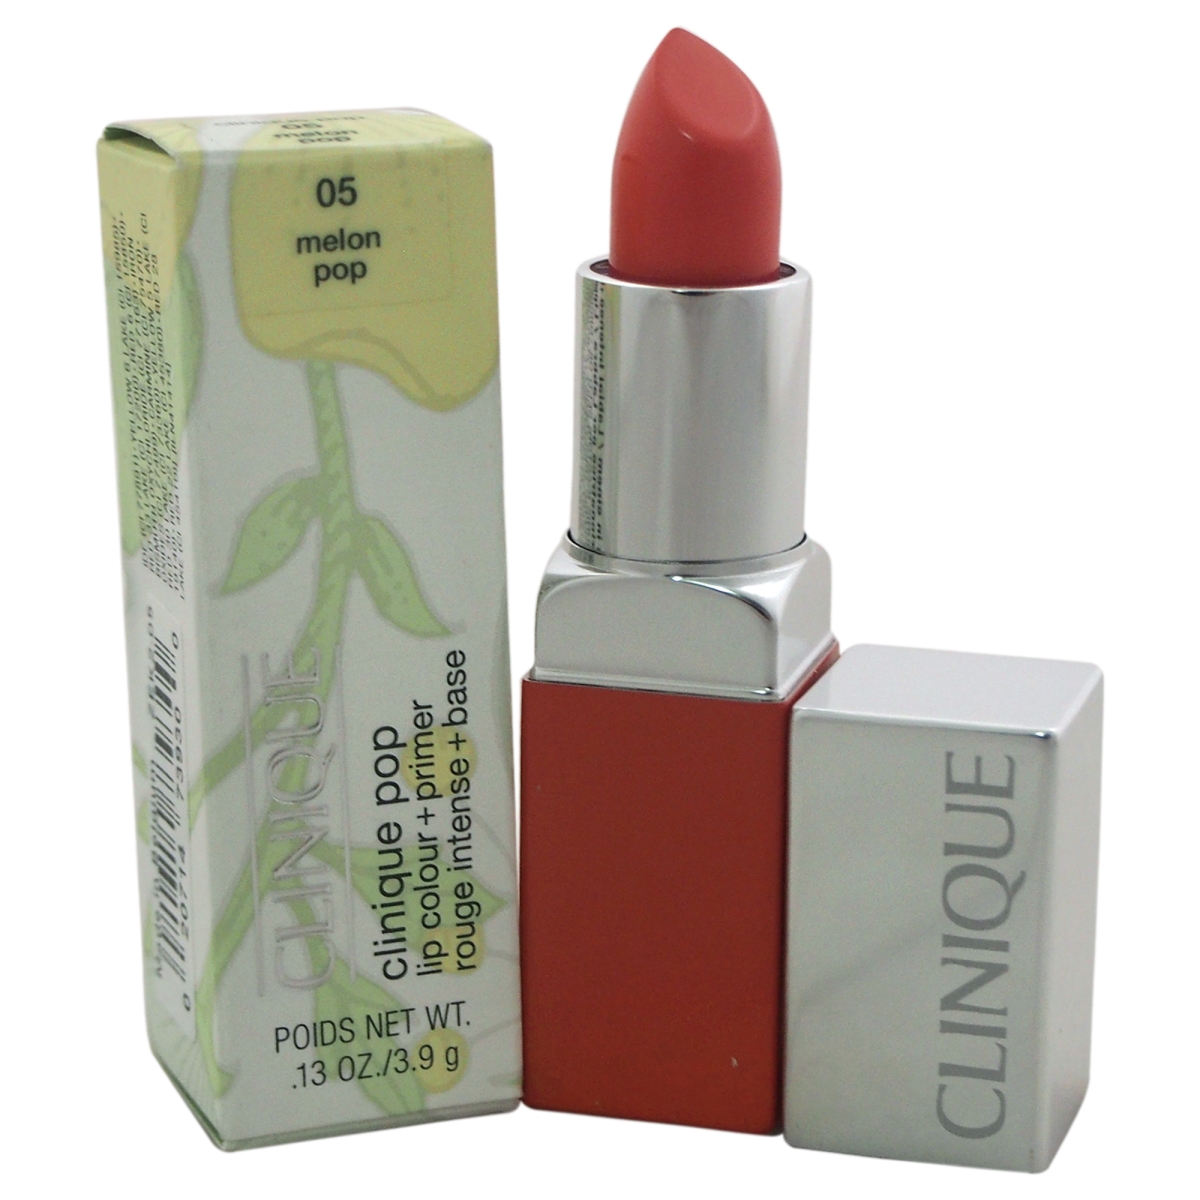 W-c-6771 0.13 Oz No. 05 Melon Pop Plus Primer Lipstick For Women